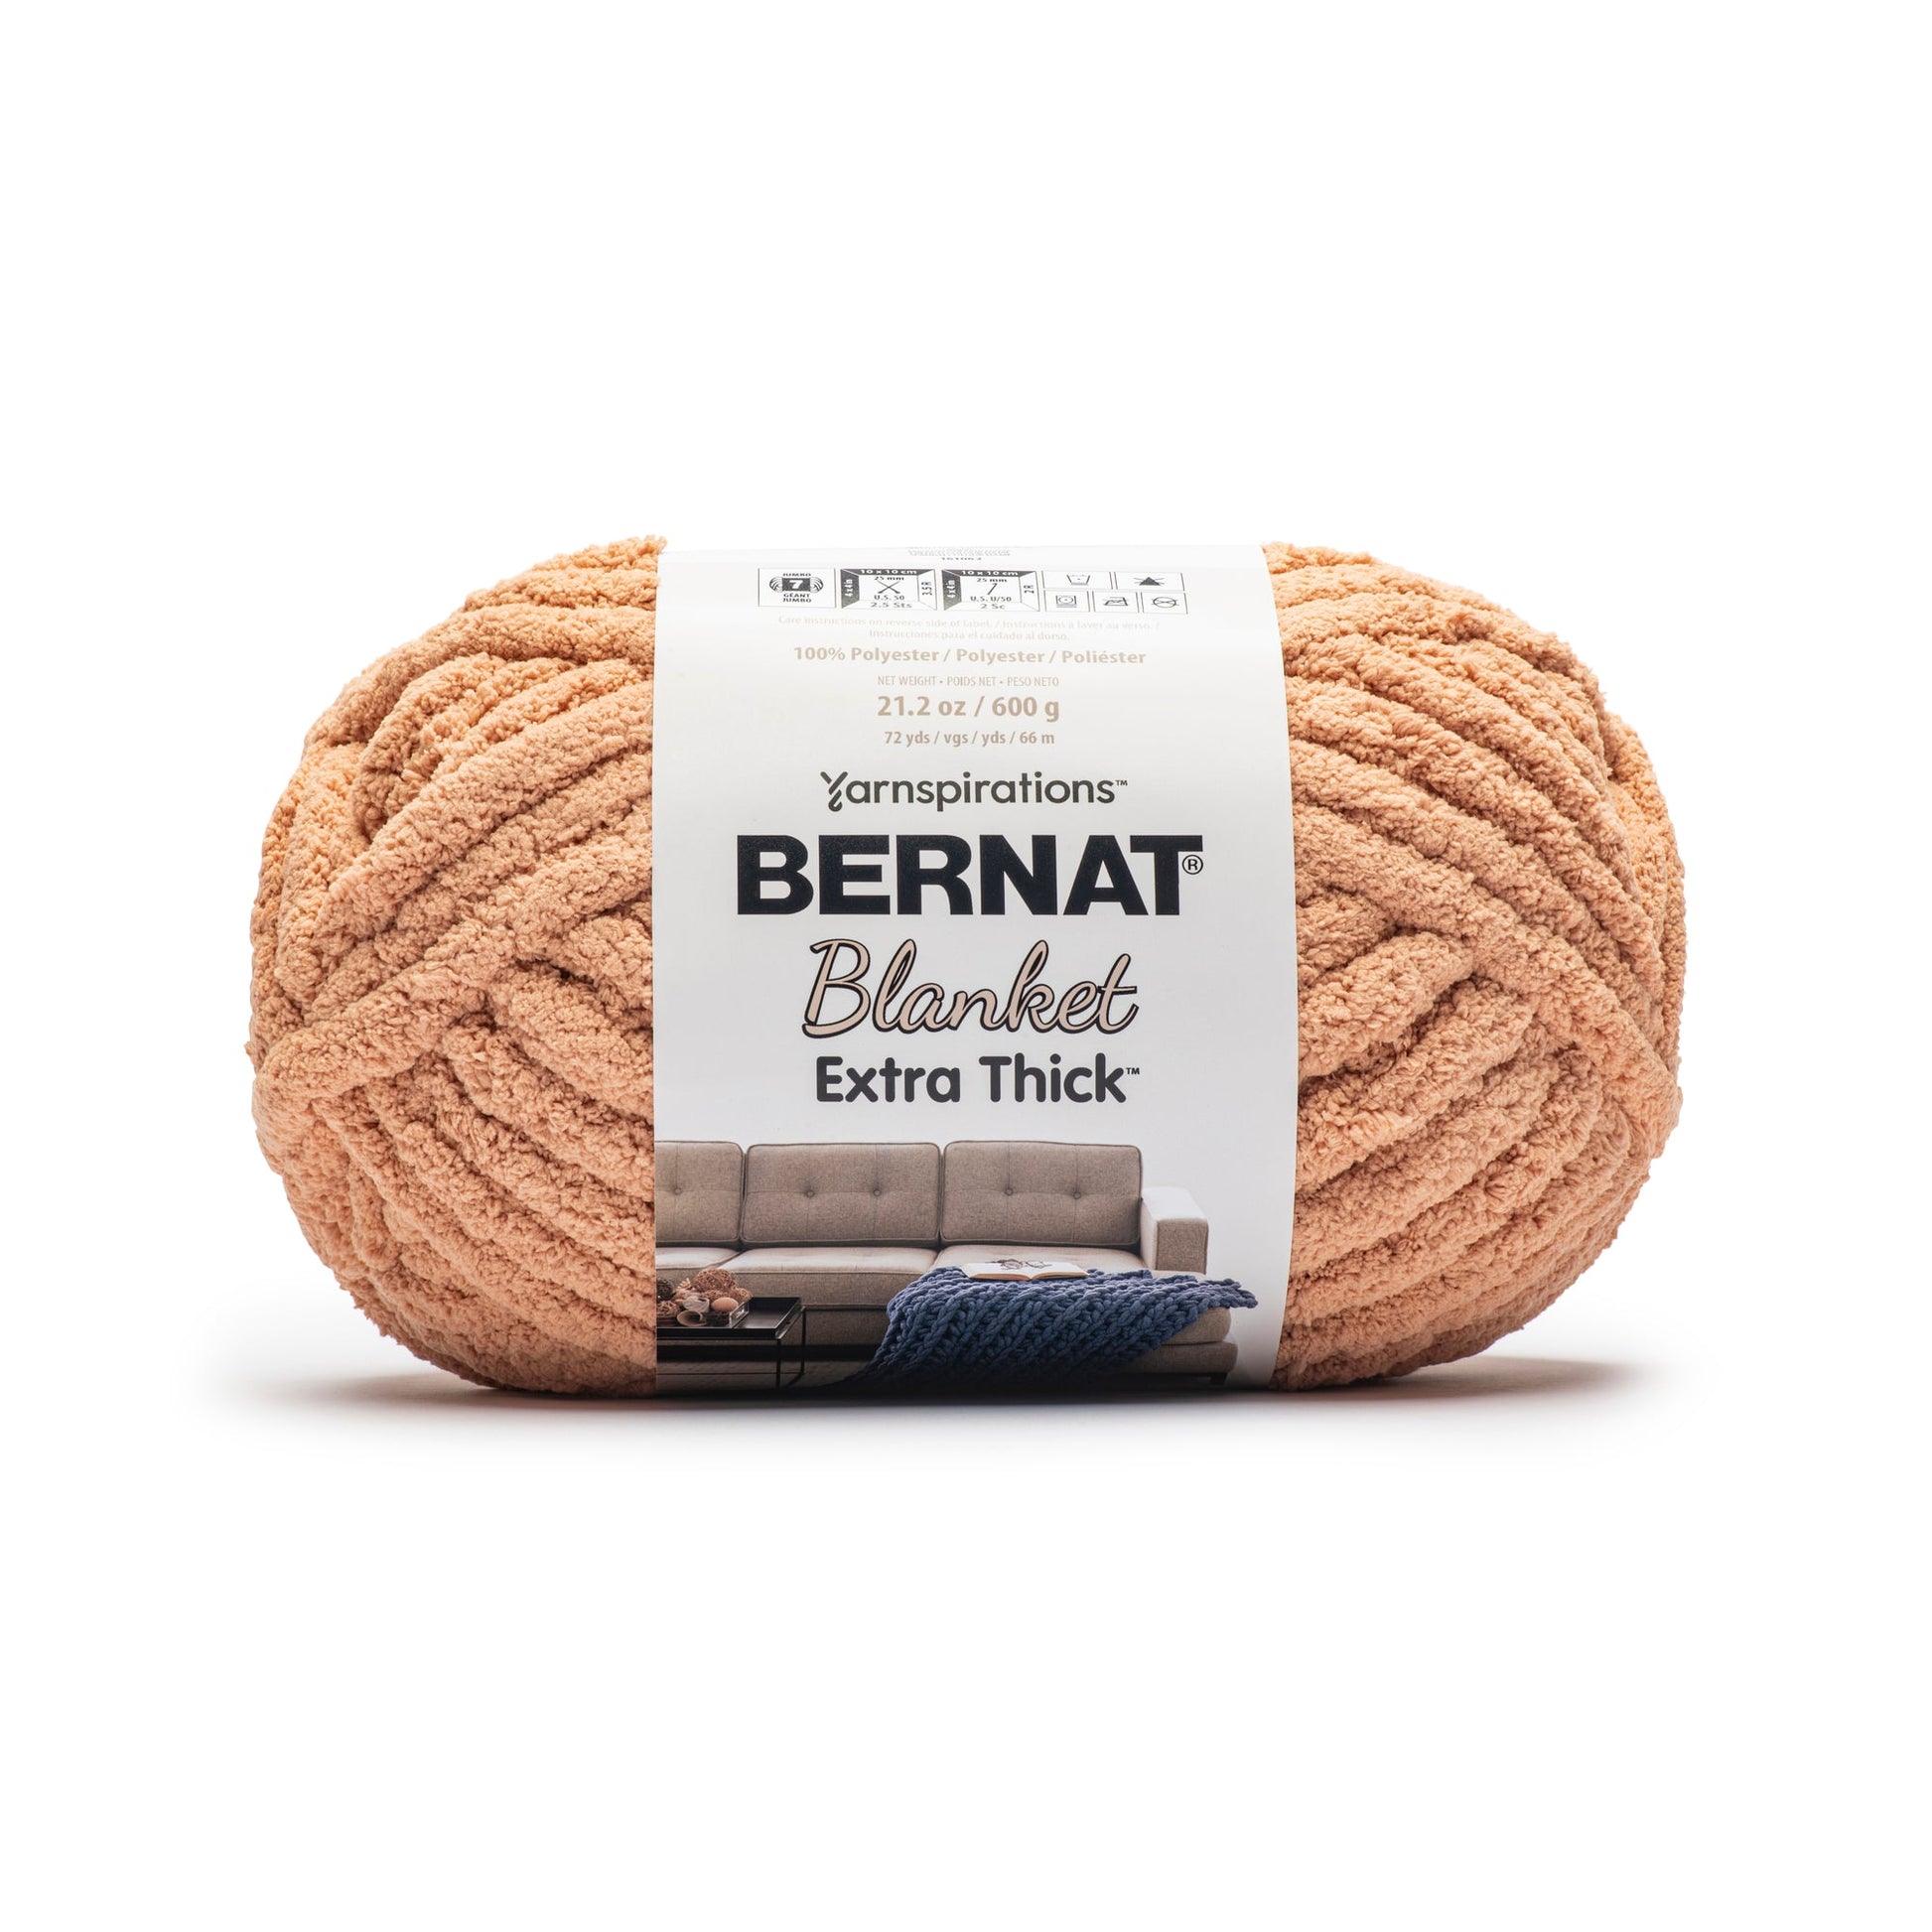 Bernat Blanket Extra Thick Yarn (600g/21.2oz) - Discontinued Shades Fawn